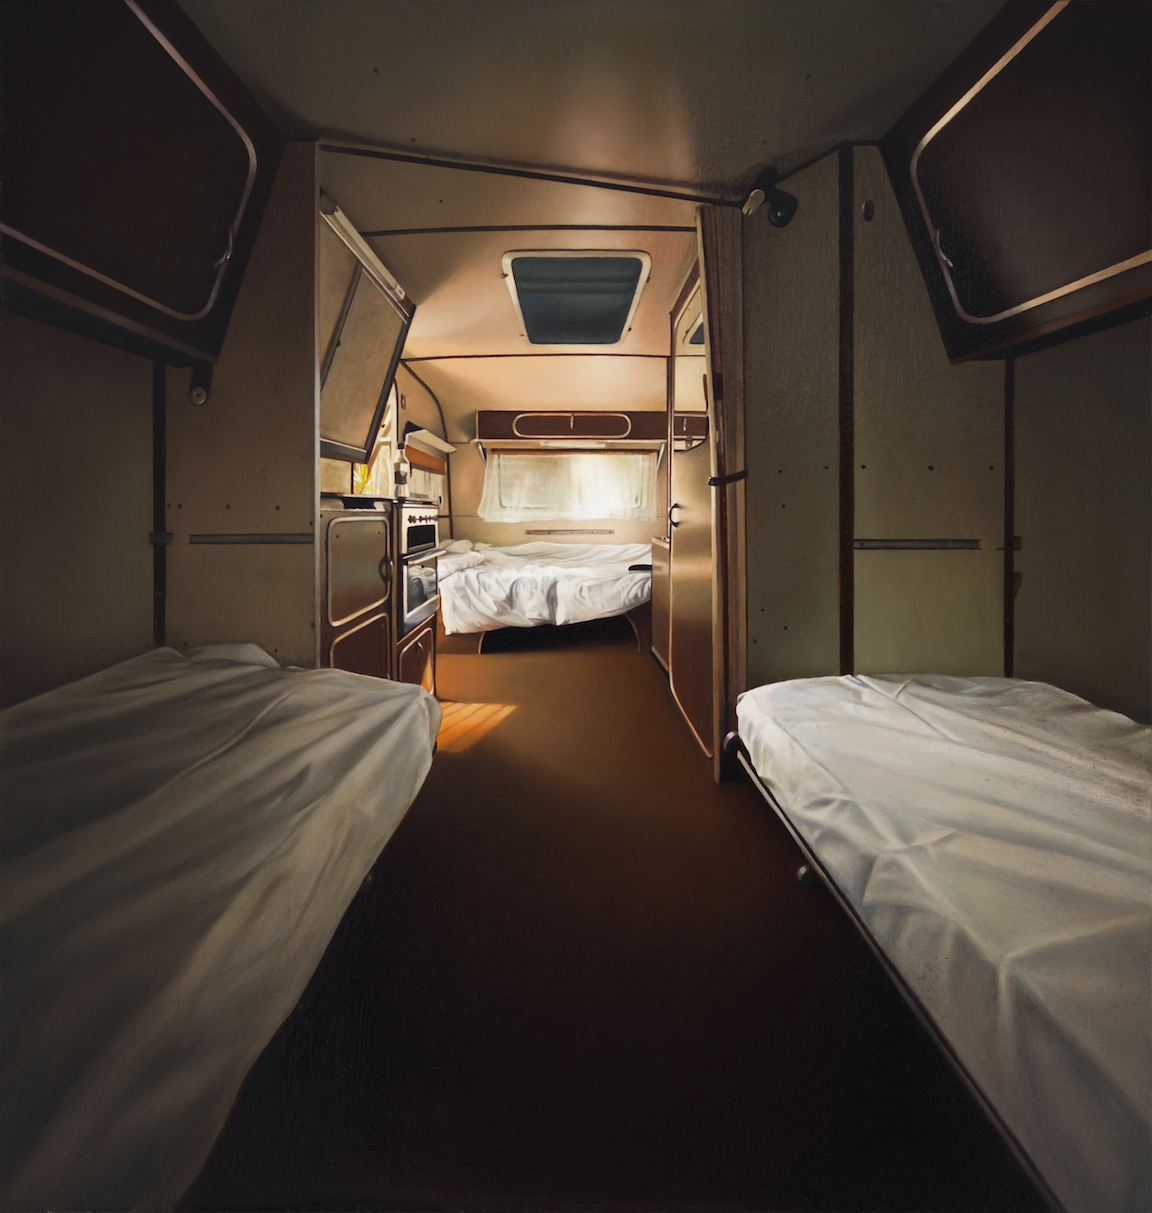 Gina Heyer 'Caravan Interior I' 2014 oil on board 300 x 315 mm